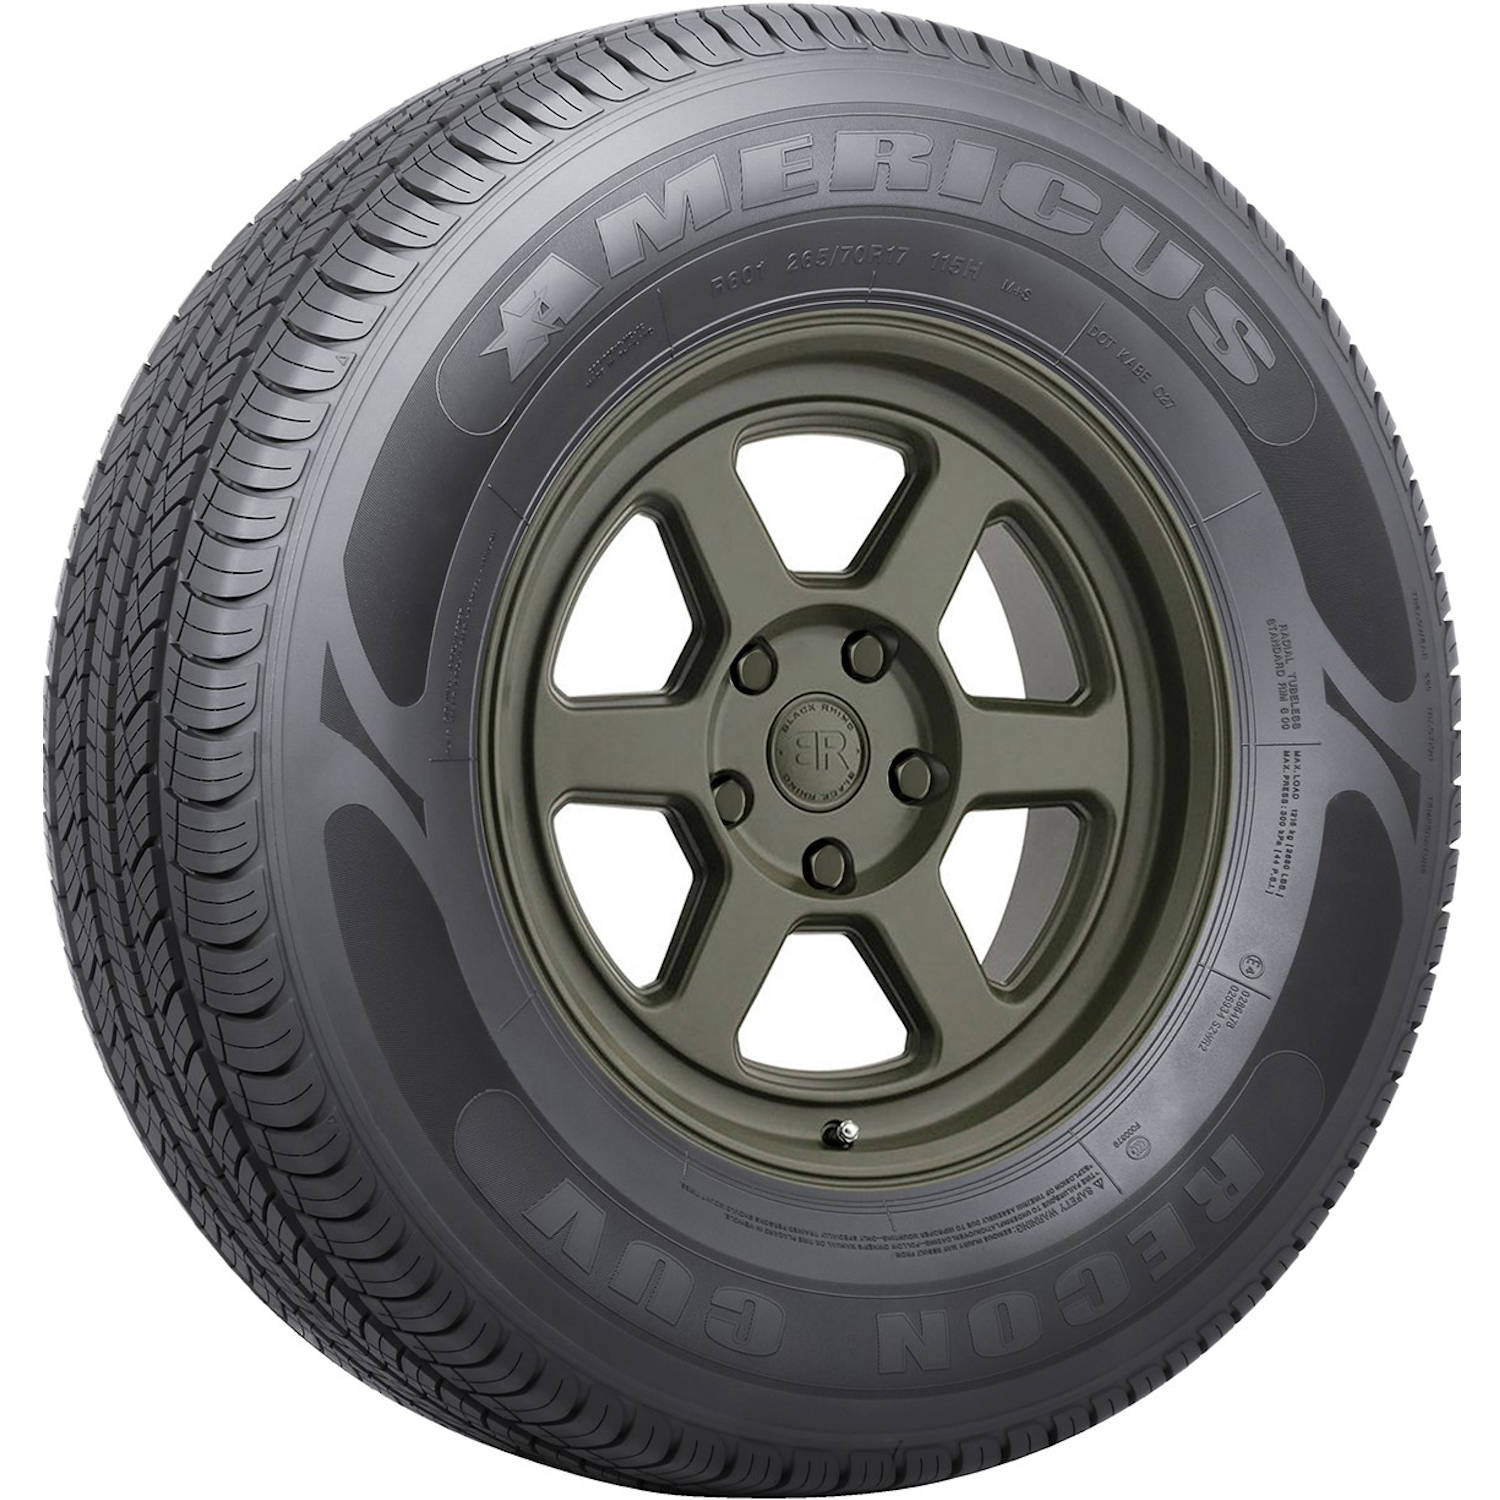 AMERICUS RECON CUV 265/70R17 (31.7X10.4R 17) Tires